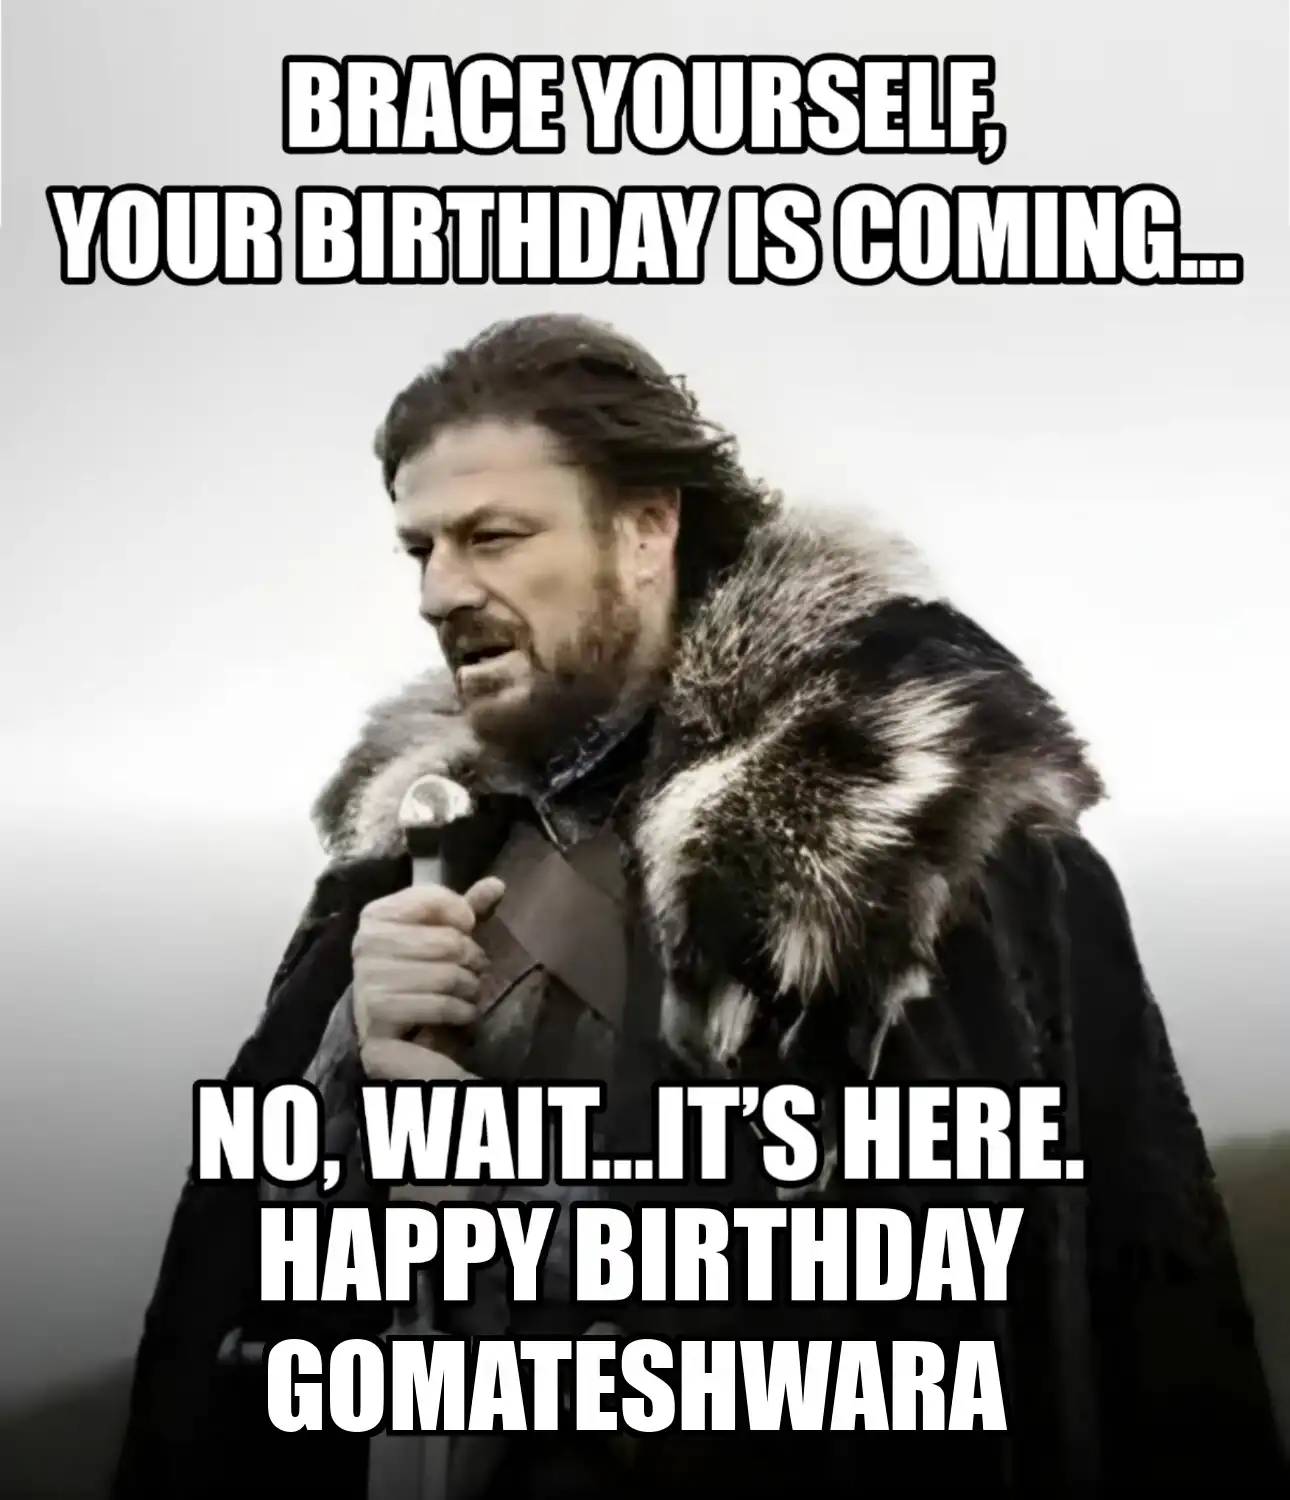 Happy Birthday Gomateshwara Brace Yourself Your Birthday Is Coming Meme